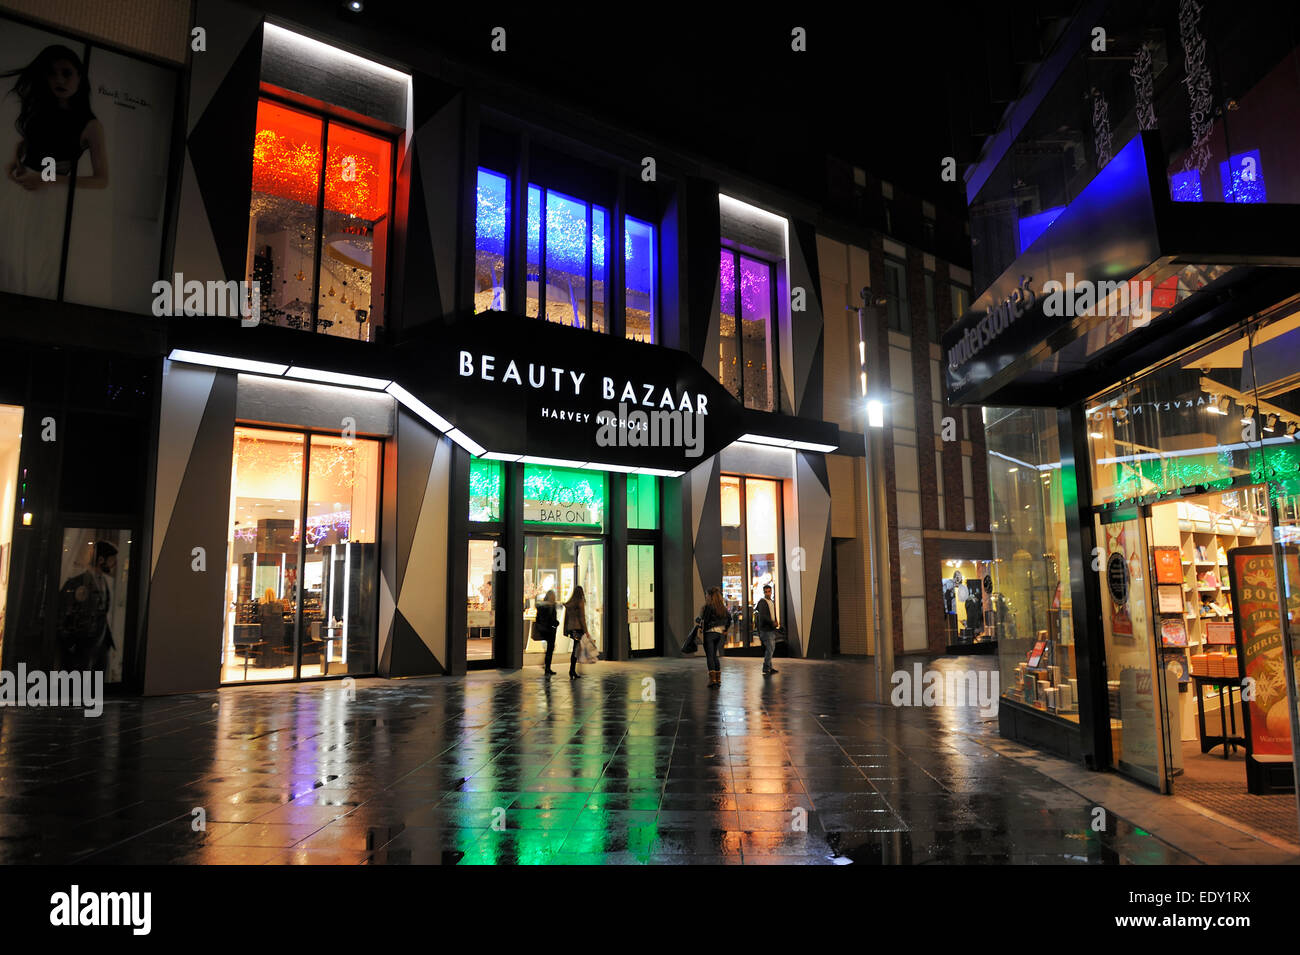 Harvey Nichols beauty bazaar in Liverpool Stock Photo - Alamy